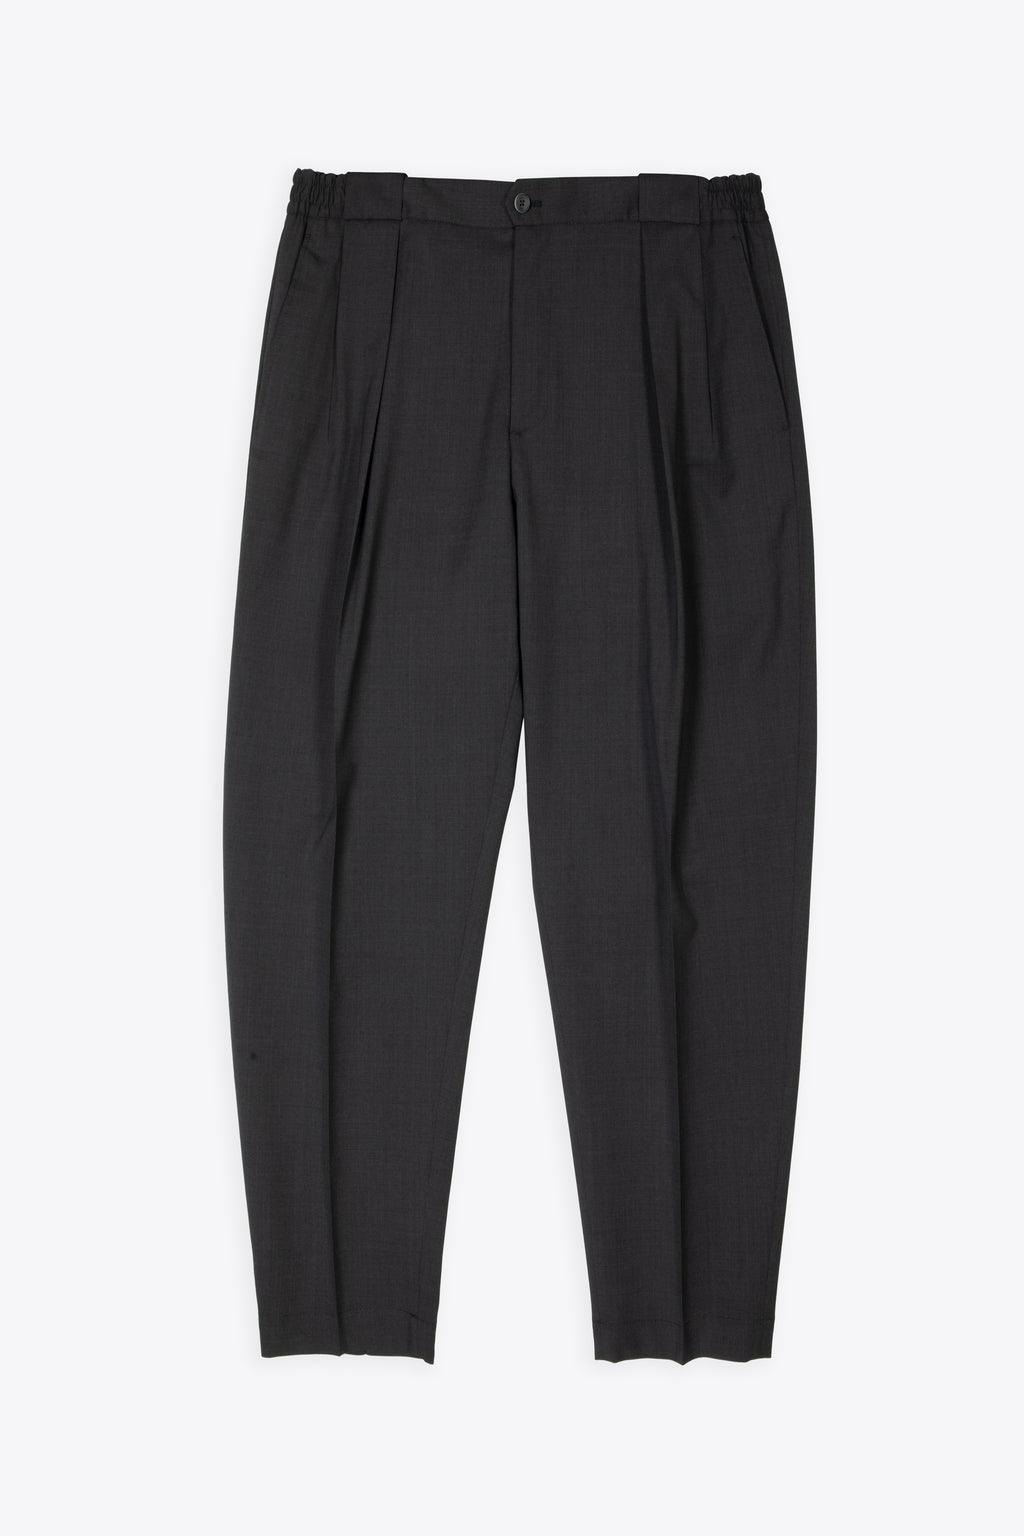 alt-image__Grey-pleatd-pant-with-elastic-waistband---Portobellos